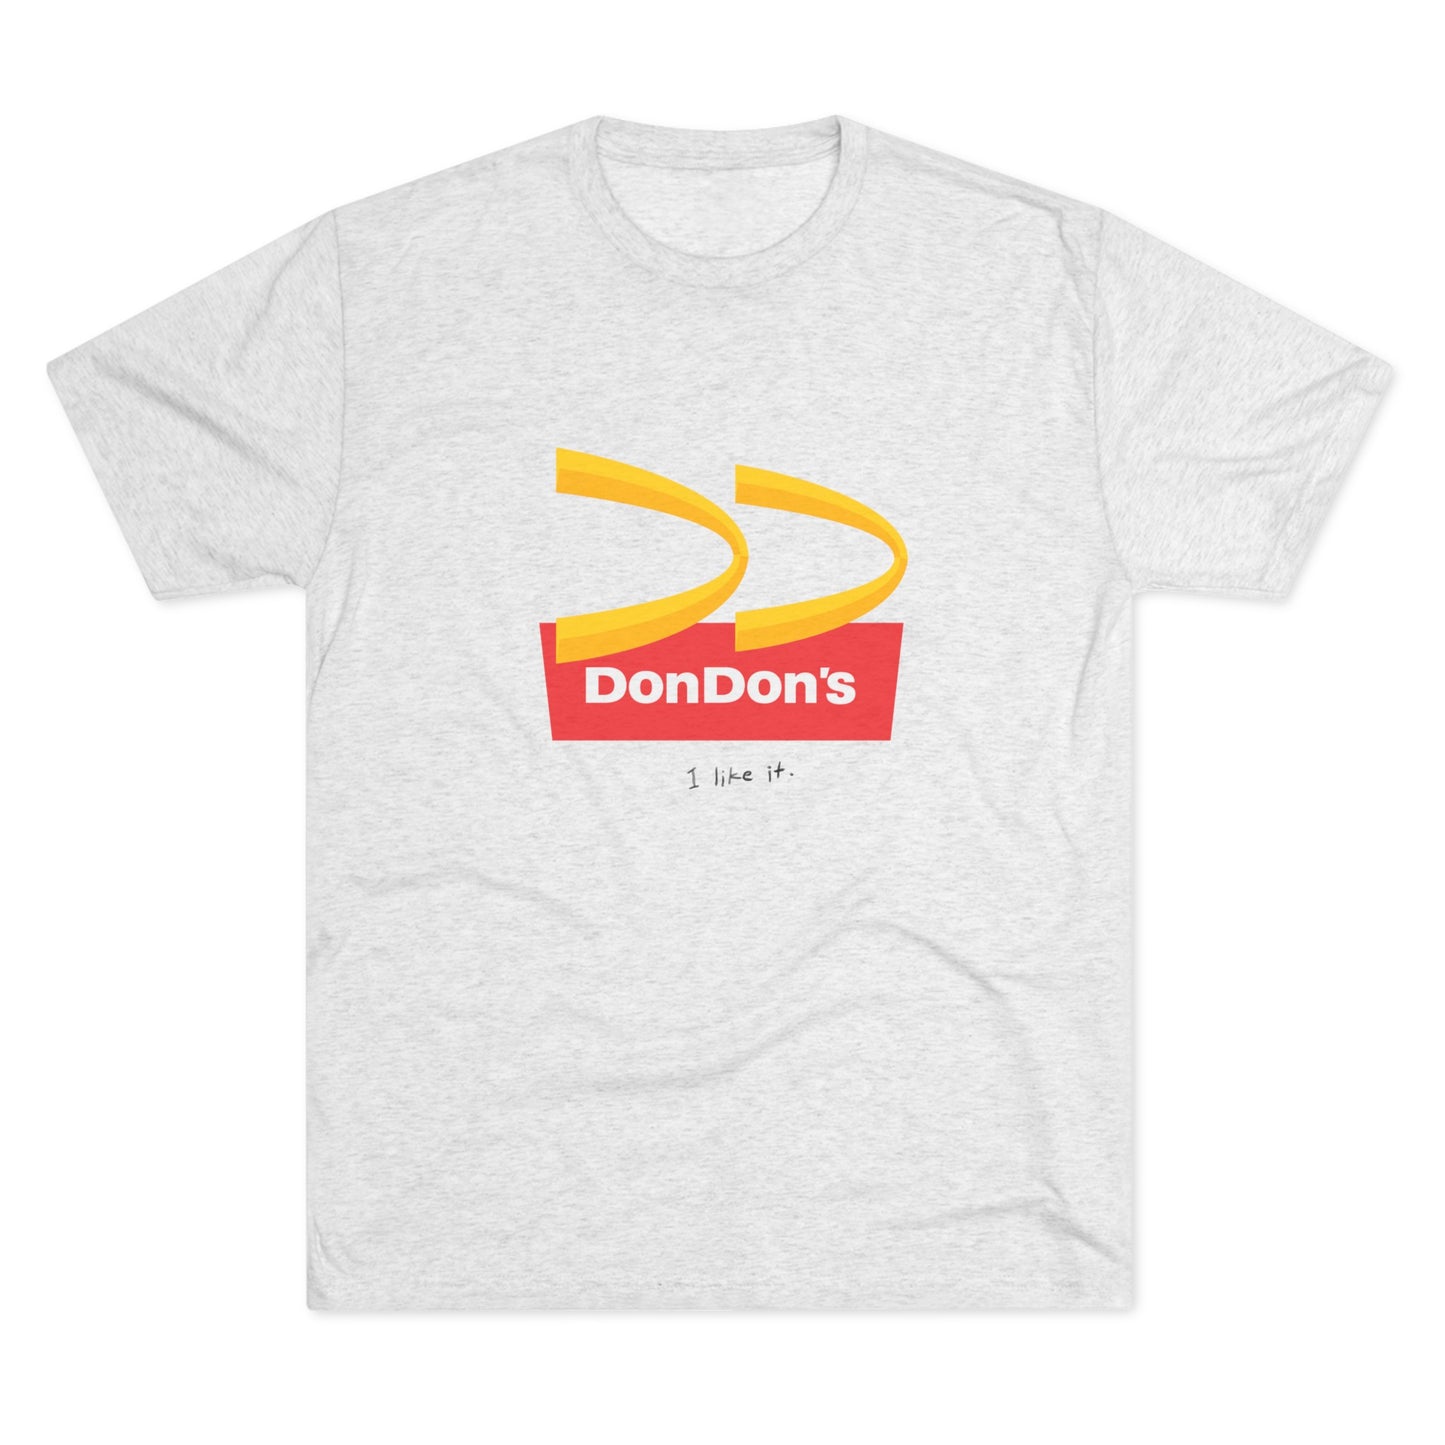 DonDon’s